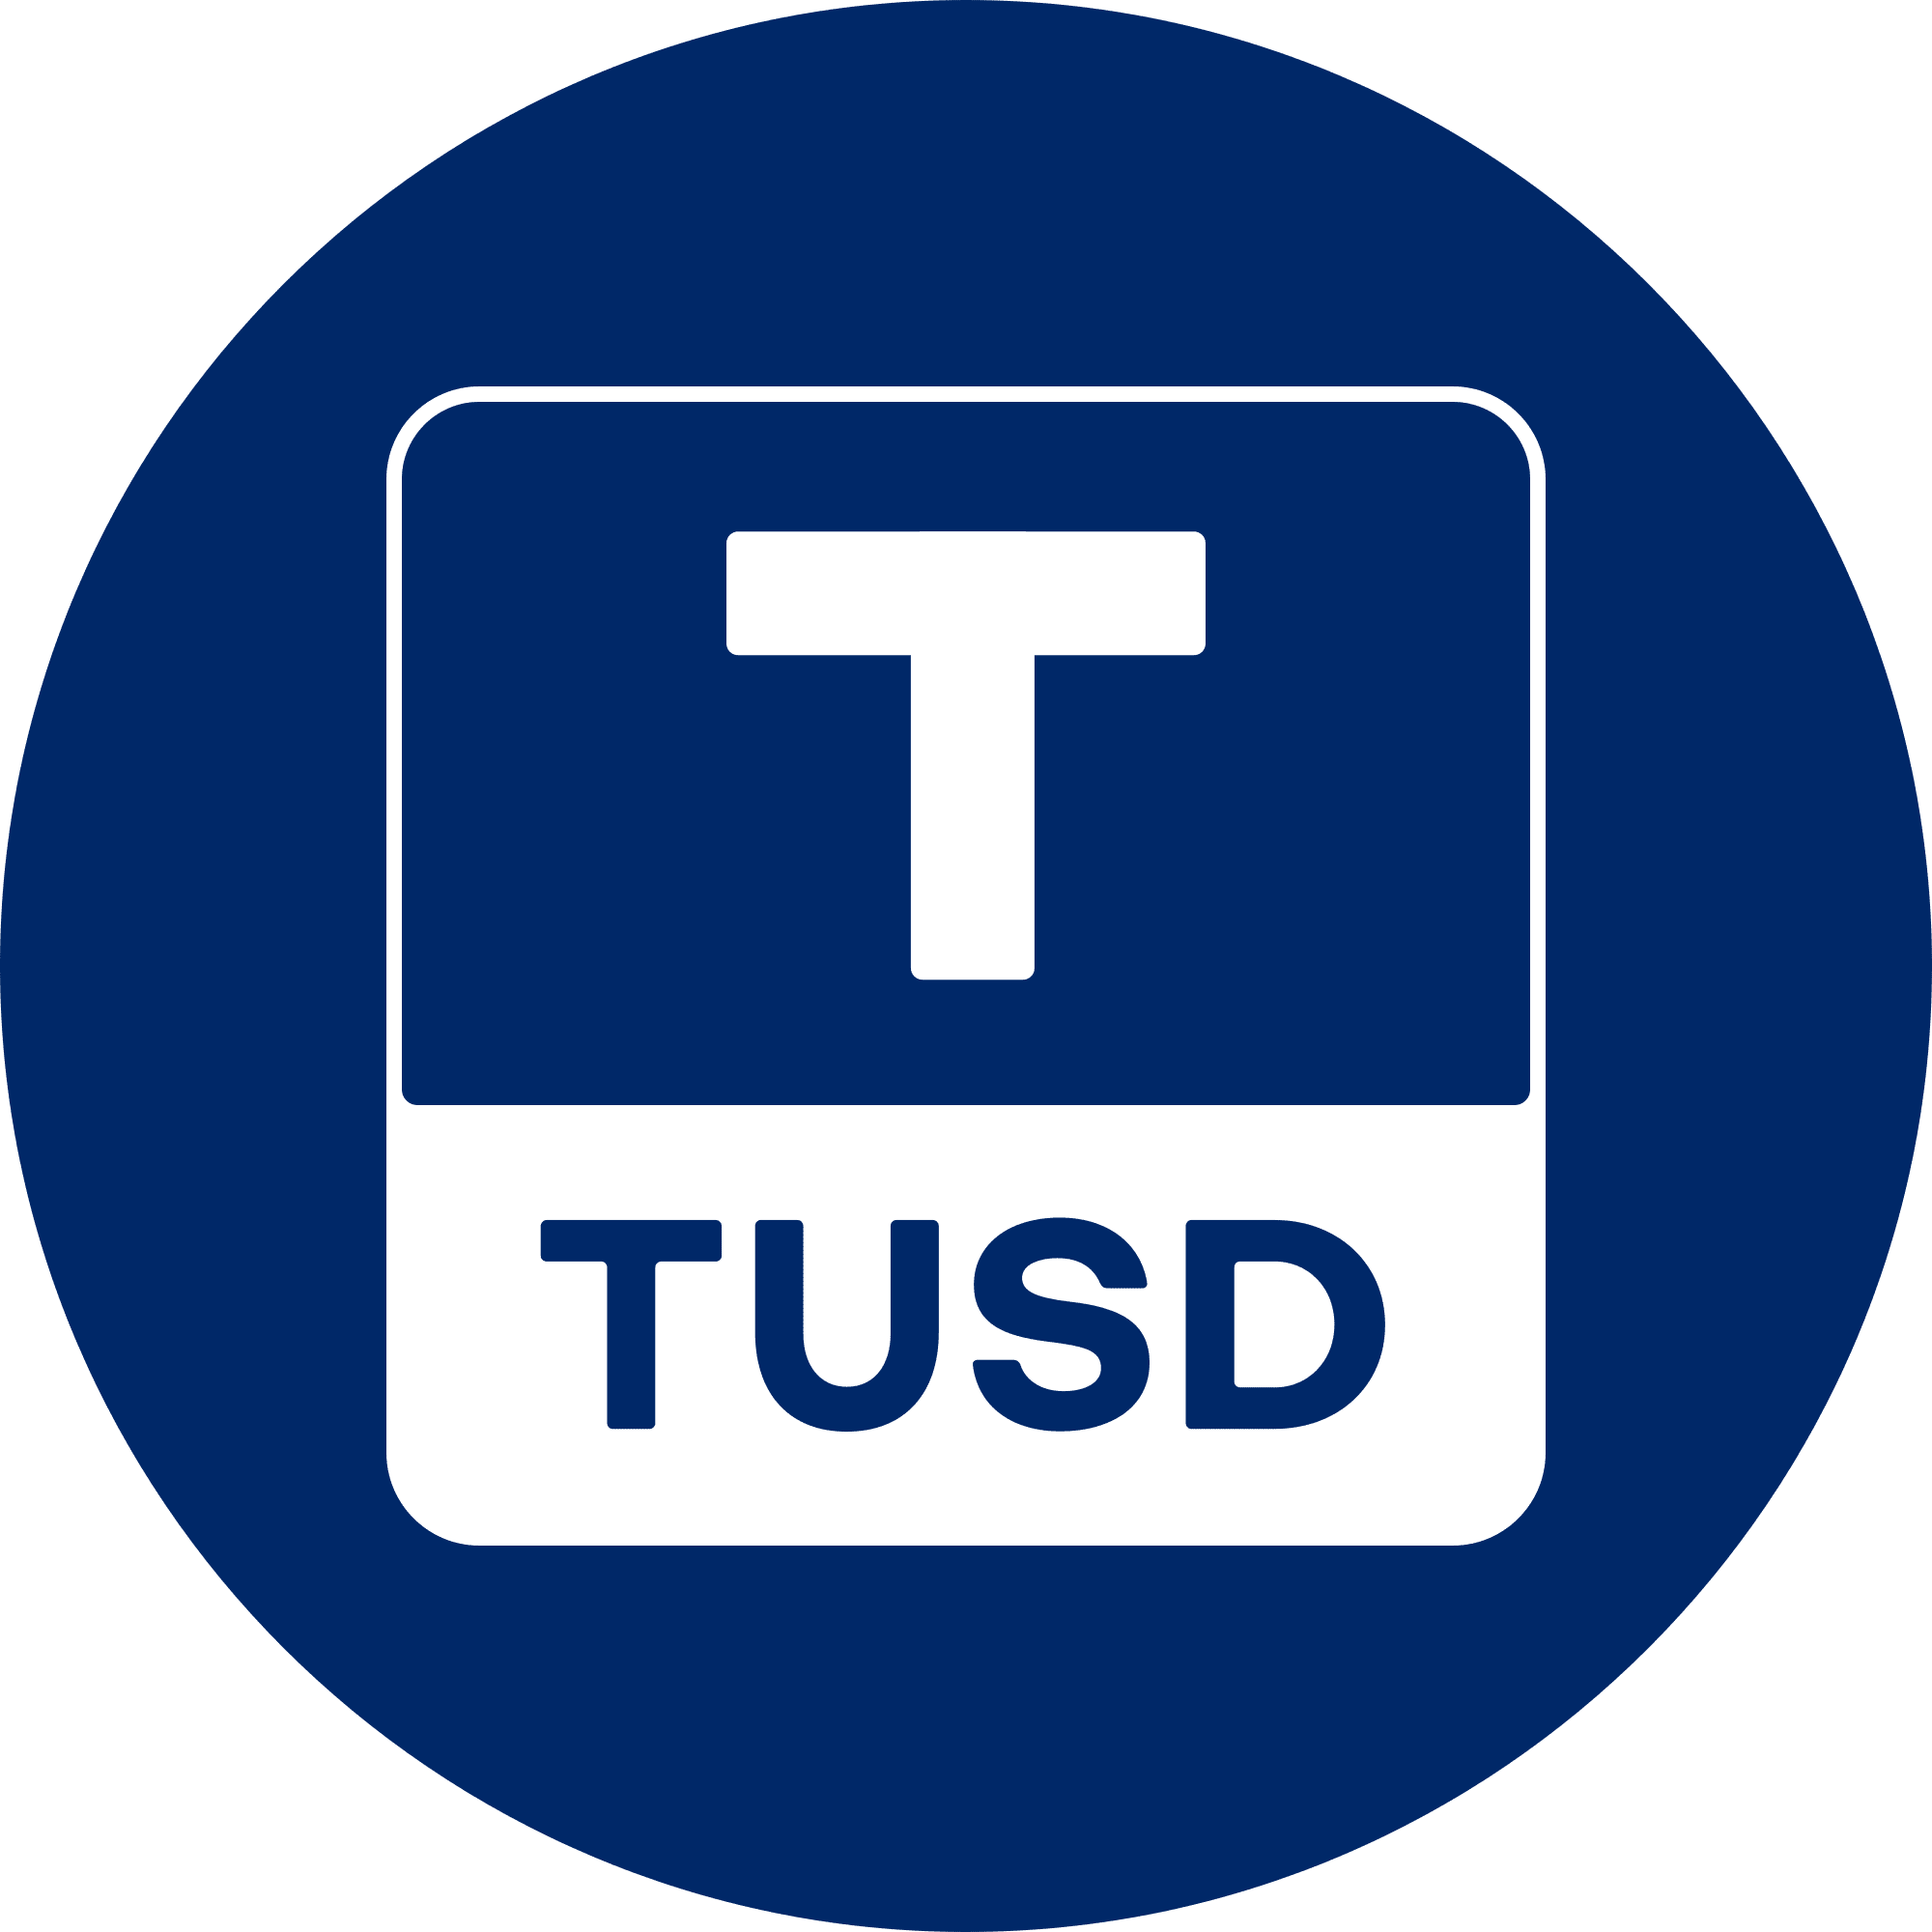 TrueUSD logo in png format